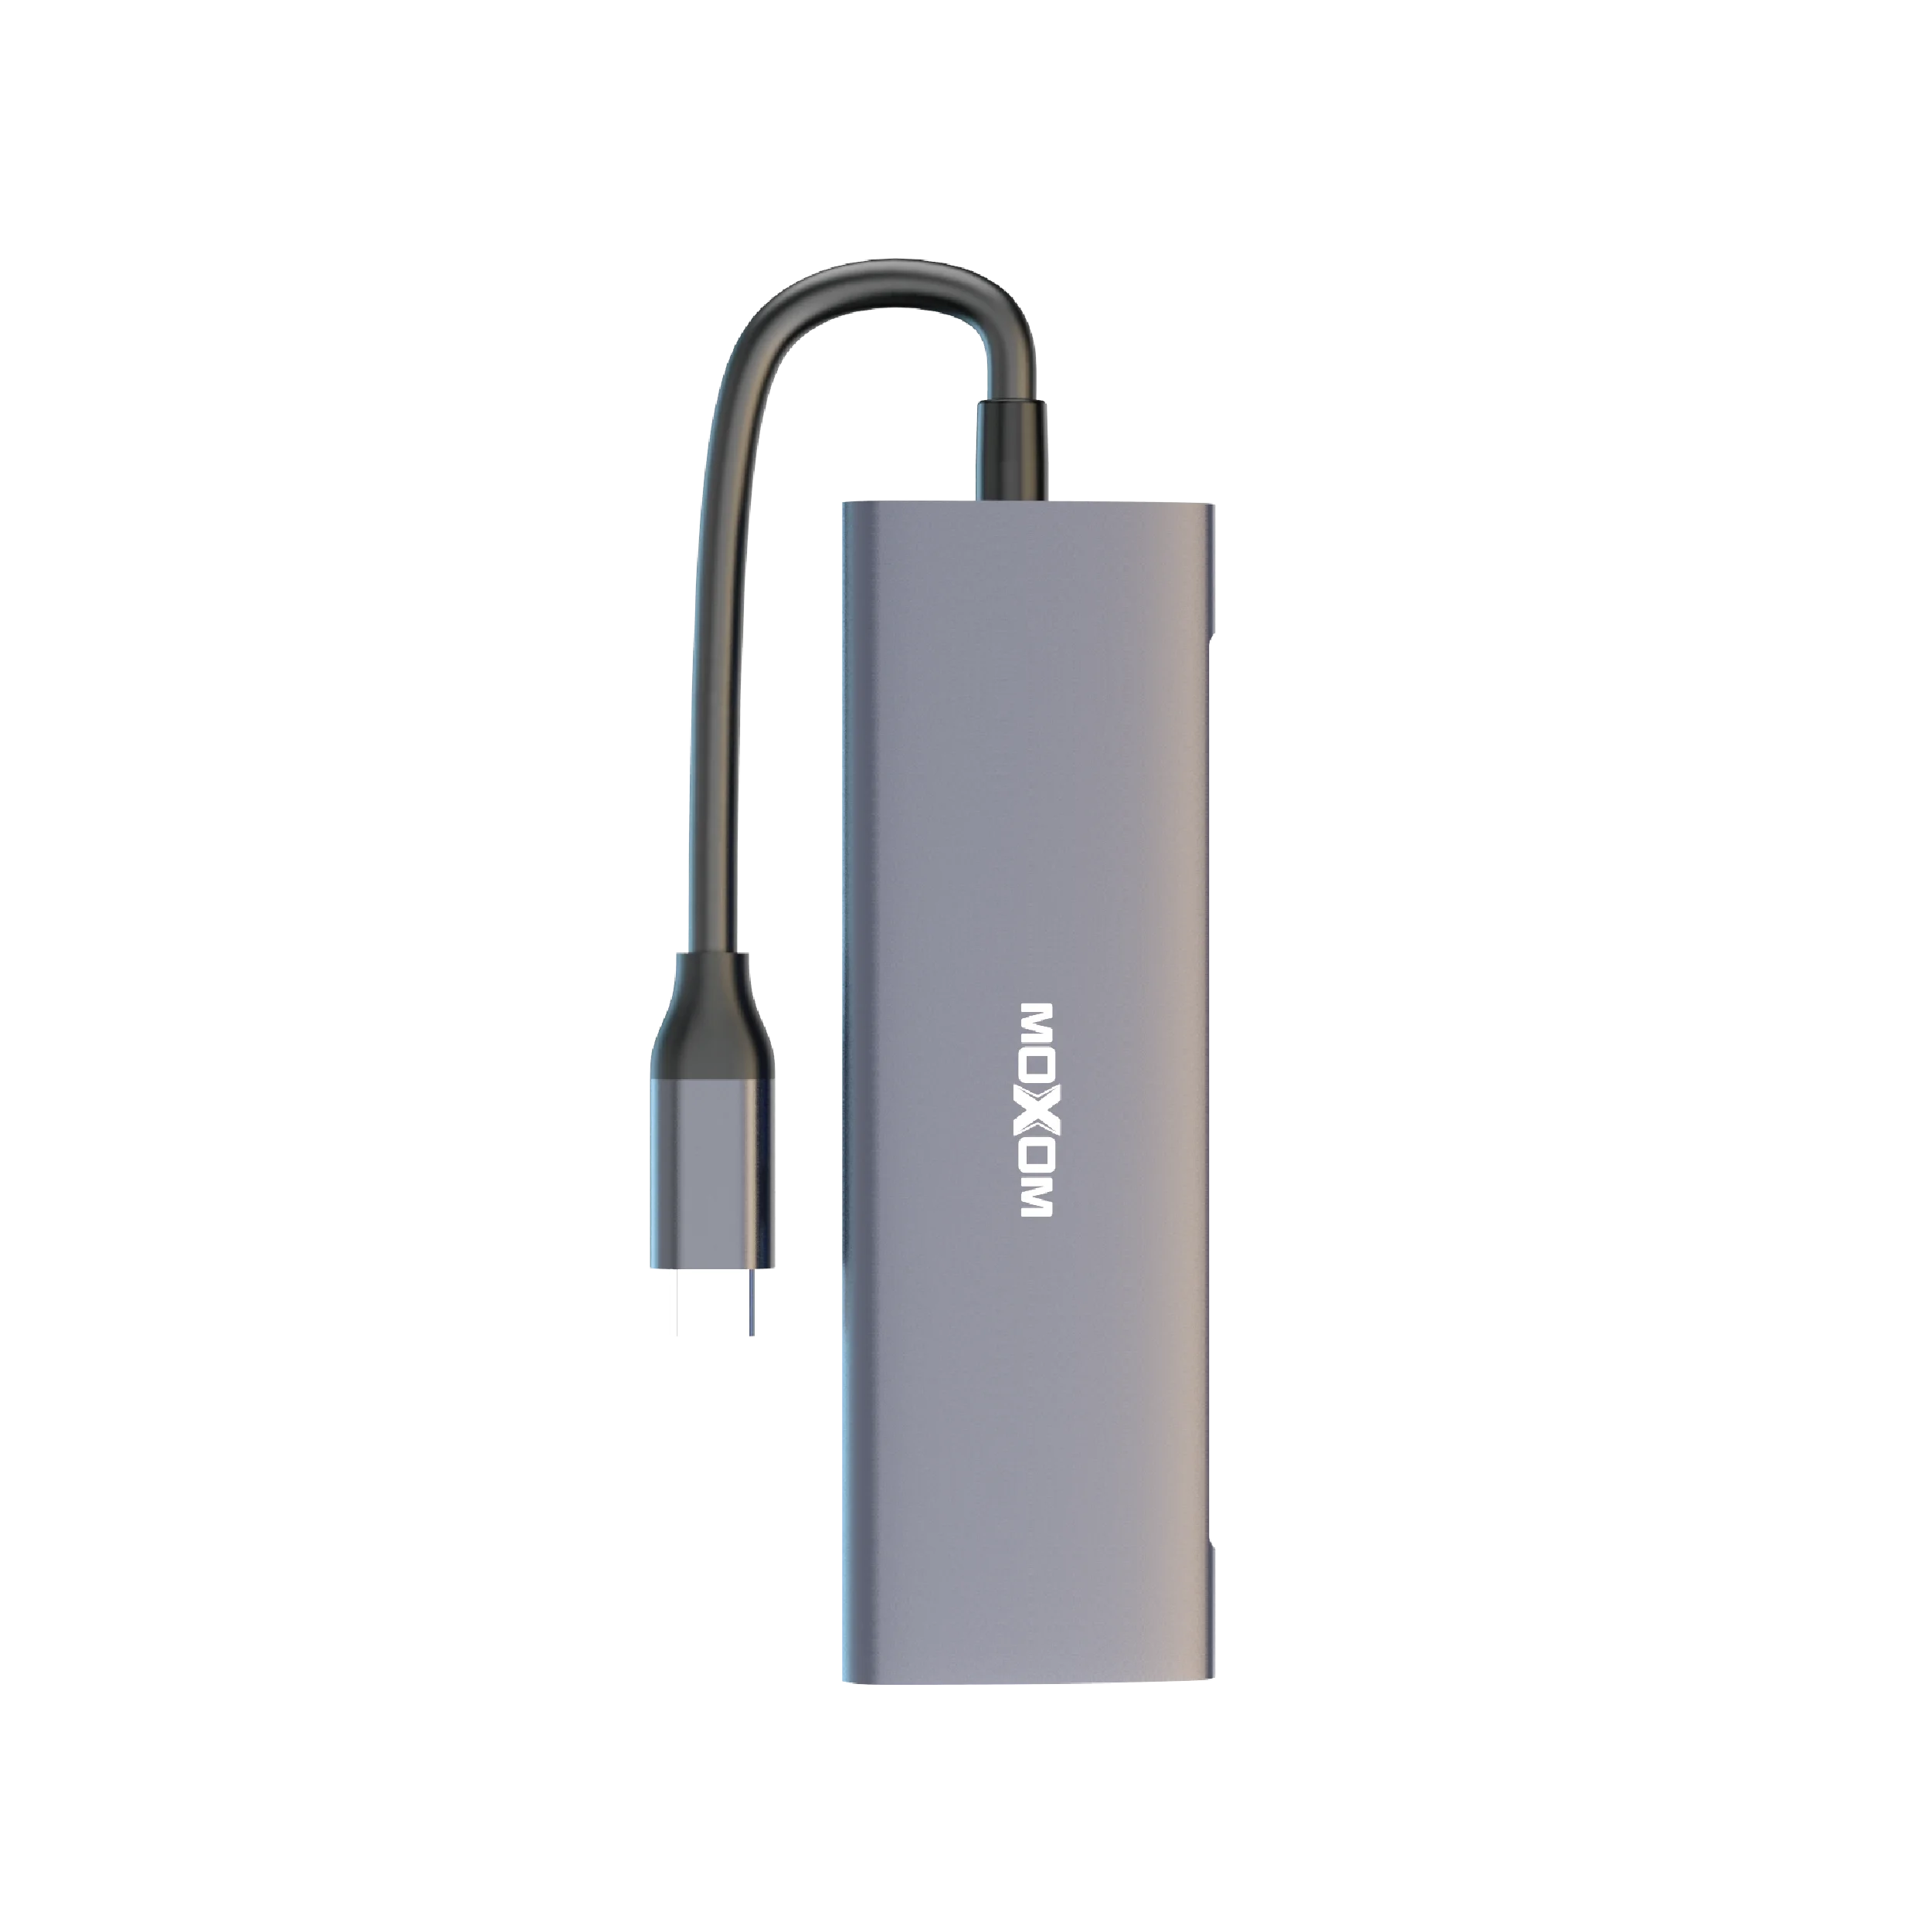 

MOXOM Charging Docking Station Laptop Type C 3.0 USB Hub 5 in 1 PD 100W Data Transmission Network Origin Interface